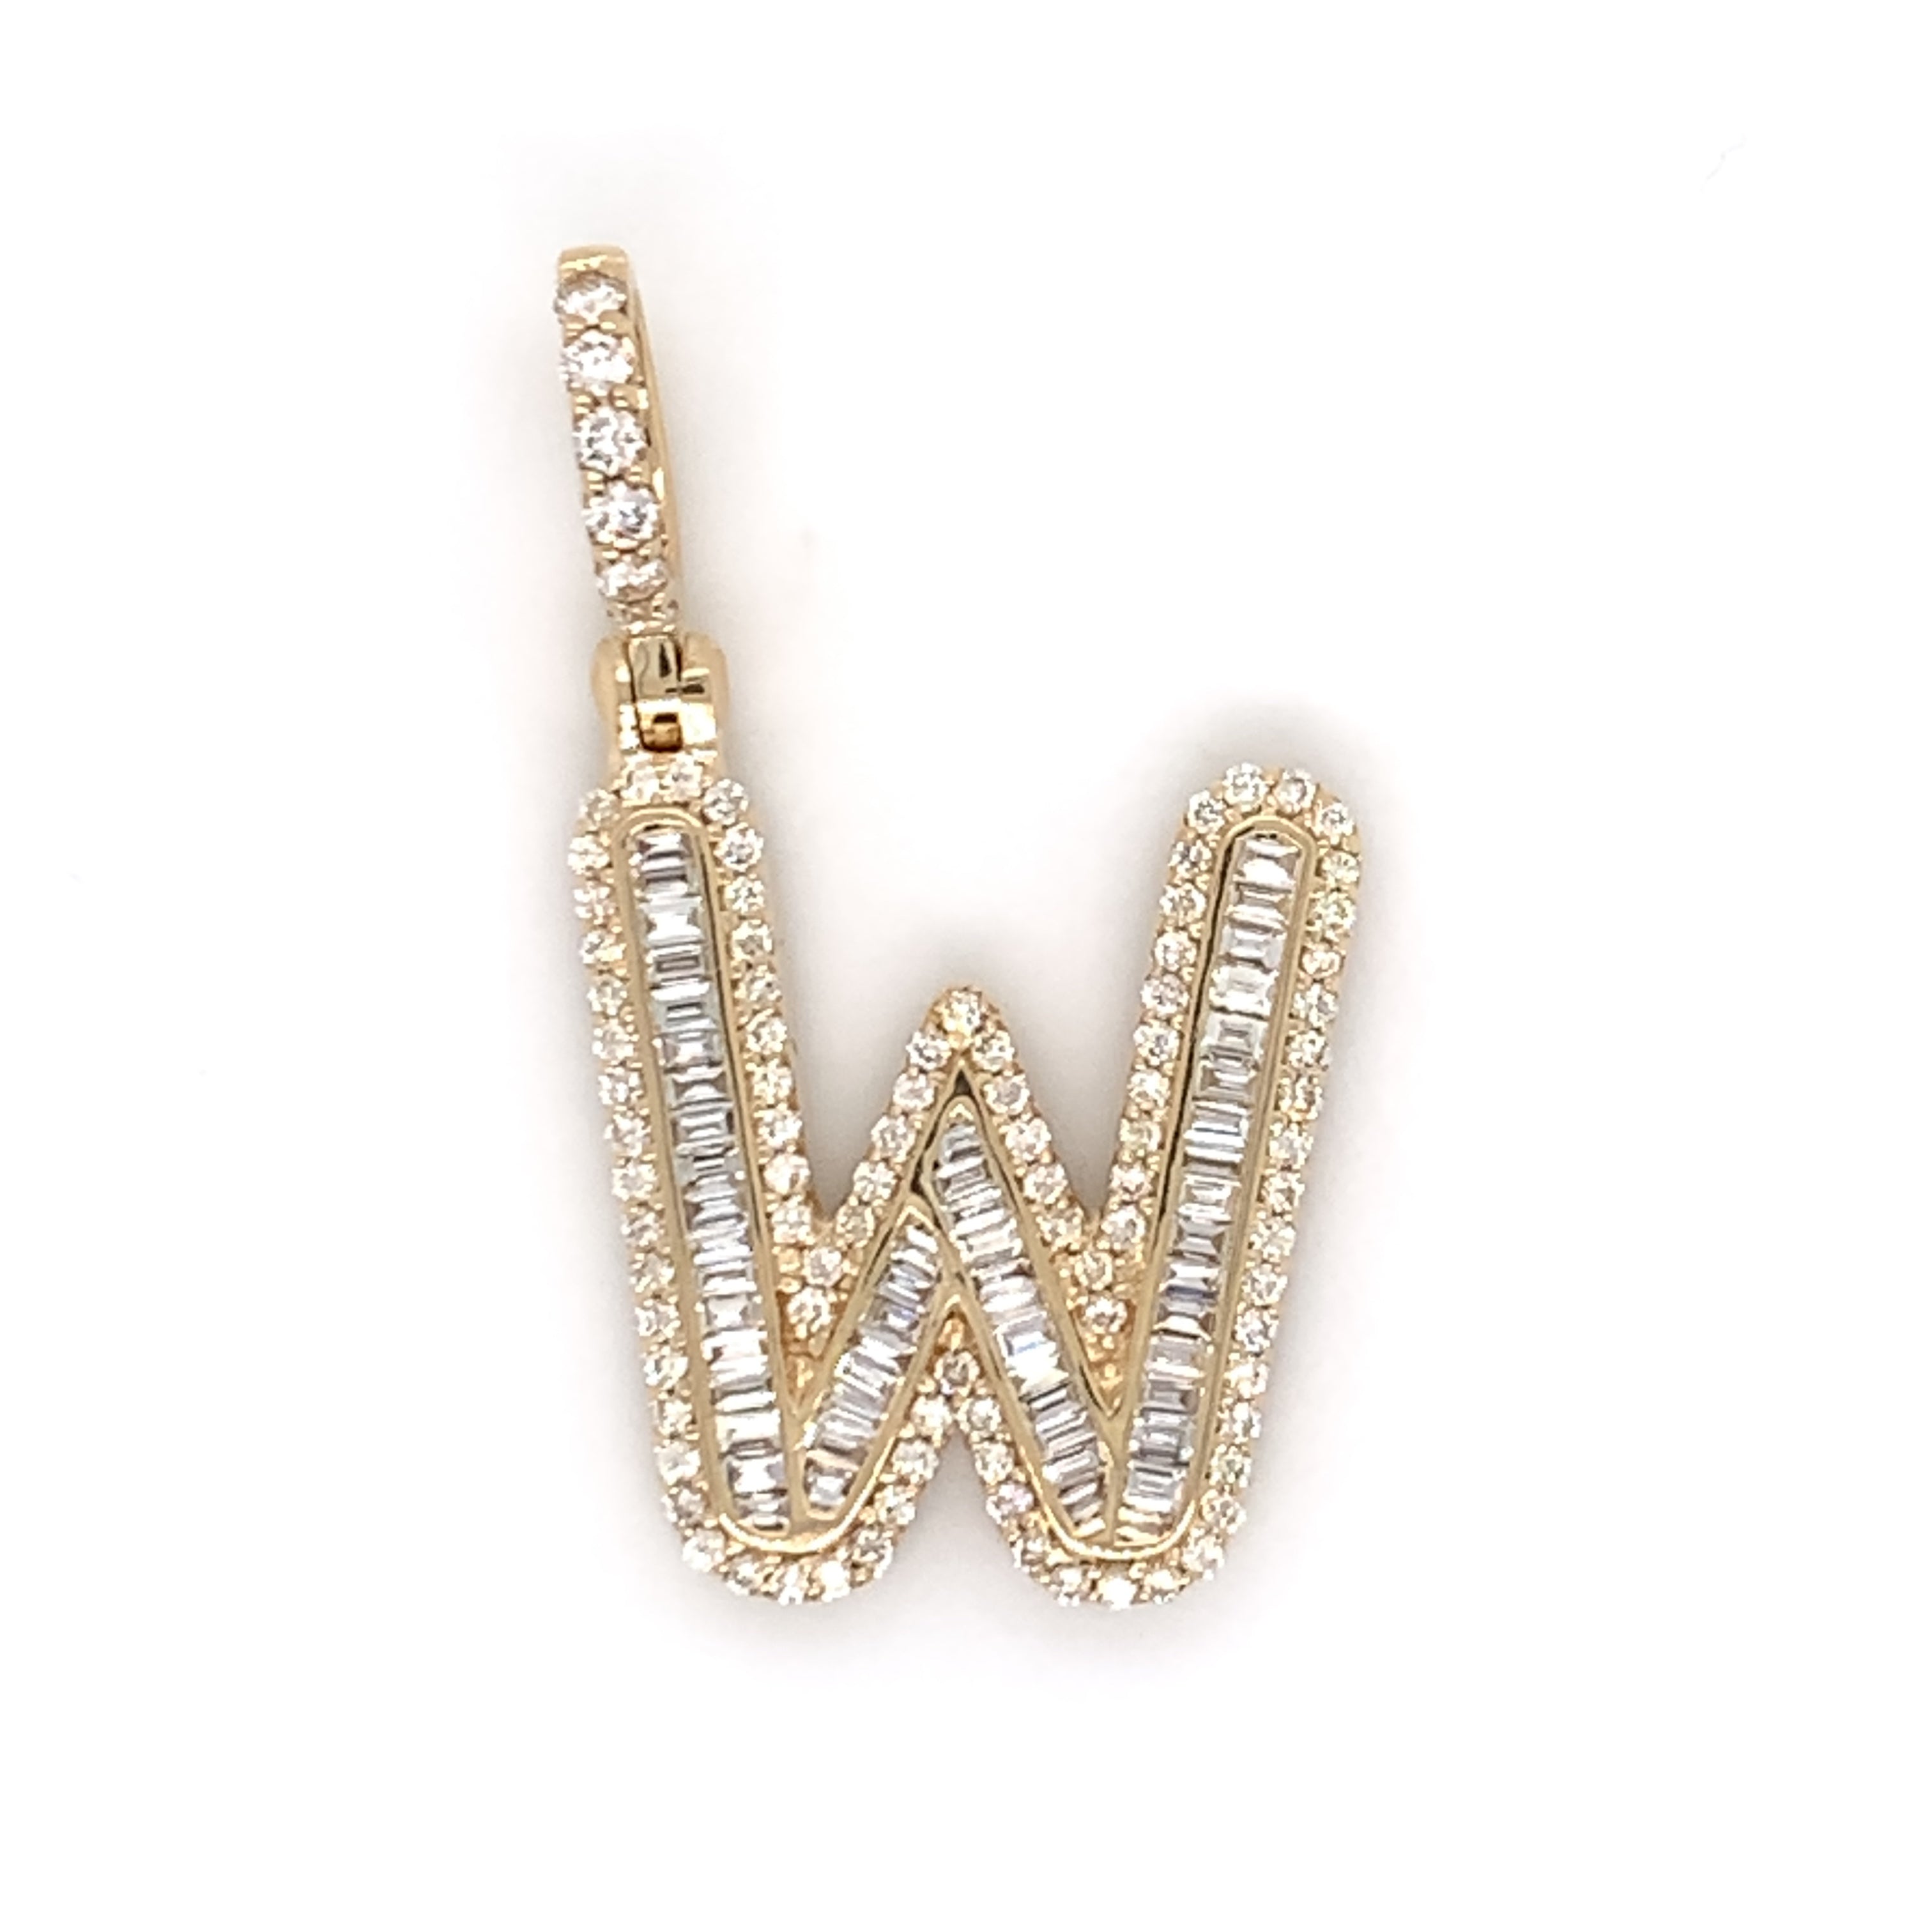 1.00 CT. Diamond Baguette Letter "W" Pendant in 10K Gold - White Carat - USA & Canada